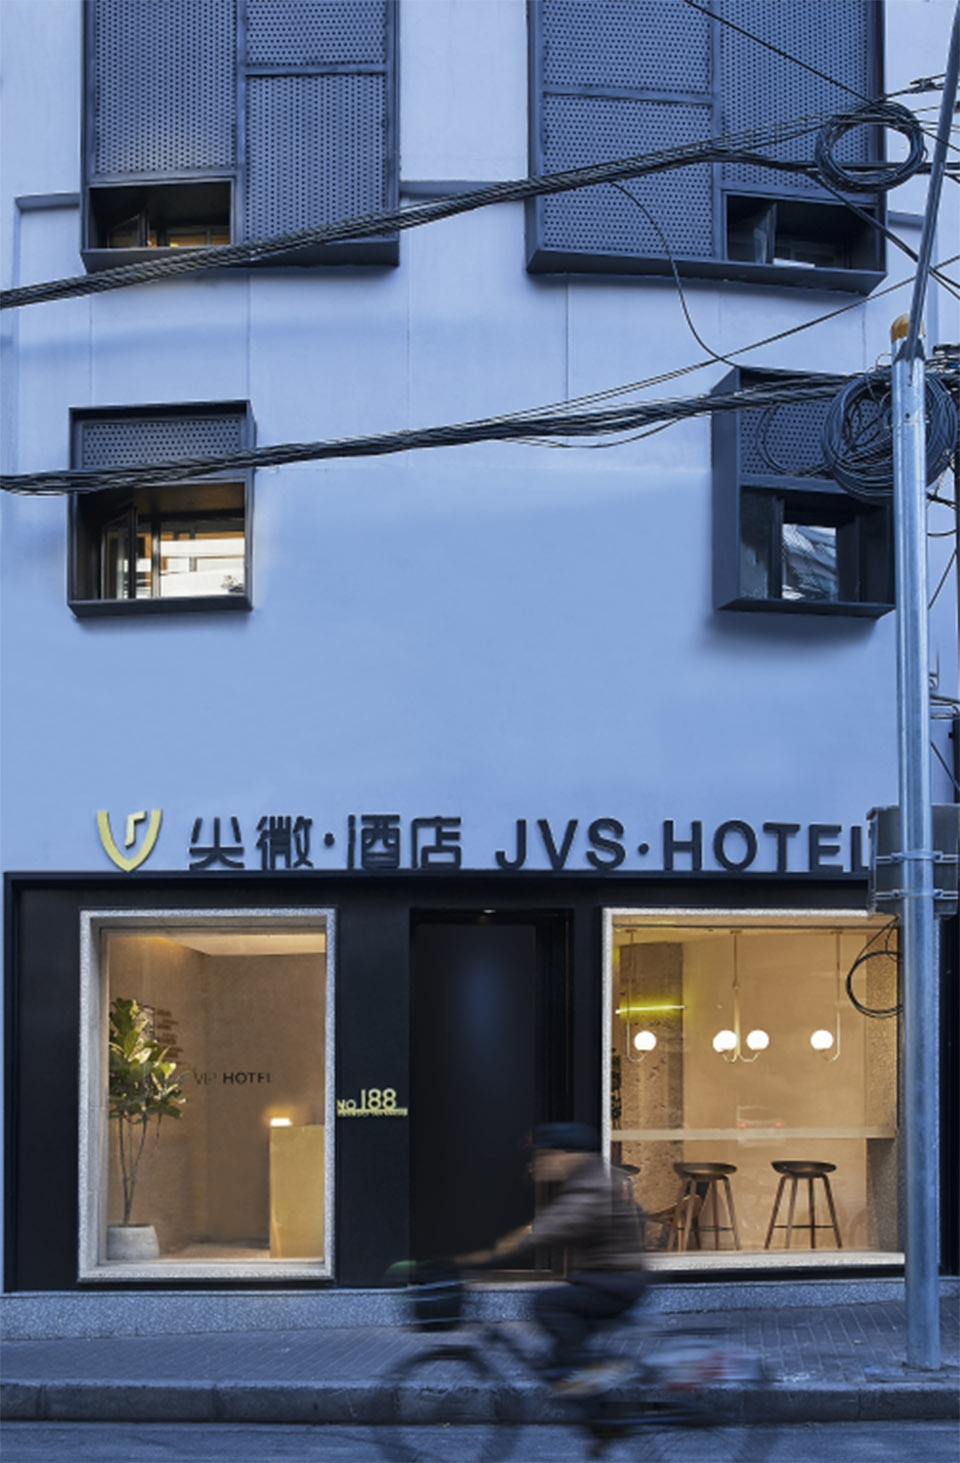 001-the-jump-bund-hotel-renovation-in-shanghai-by-muxin-design-studio-960x1463.jpg